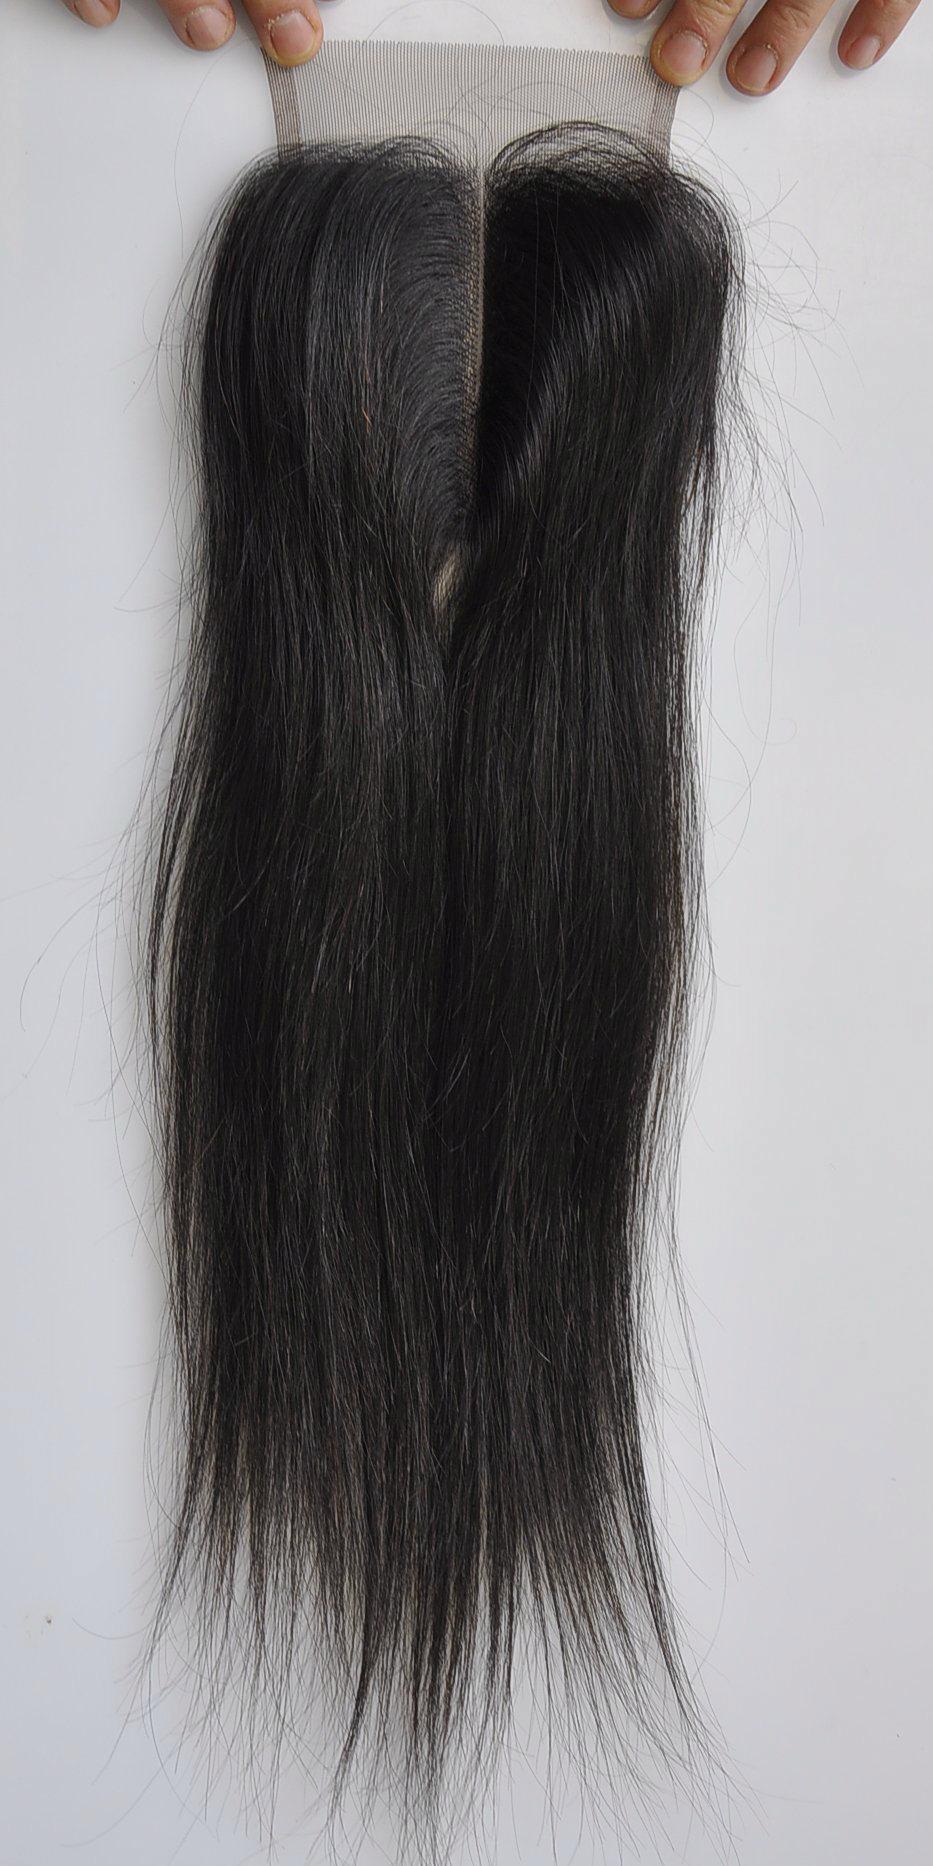 Virgin Human Hair Lace Closure at Wholesale Price (Straight)